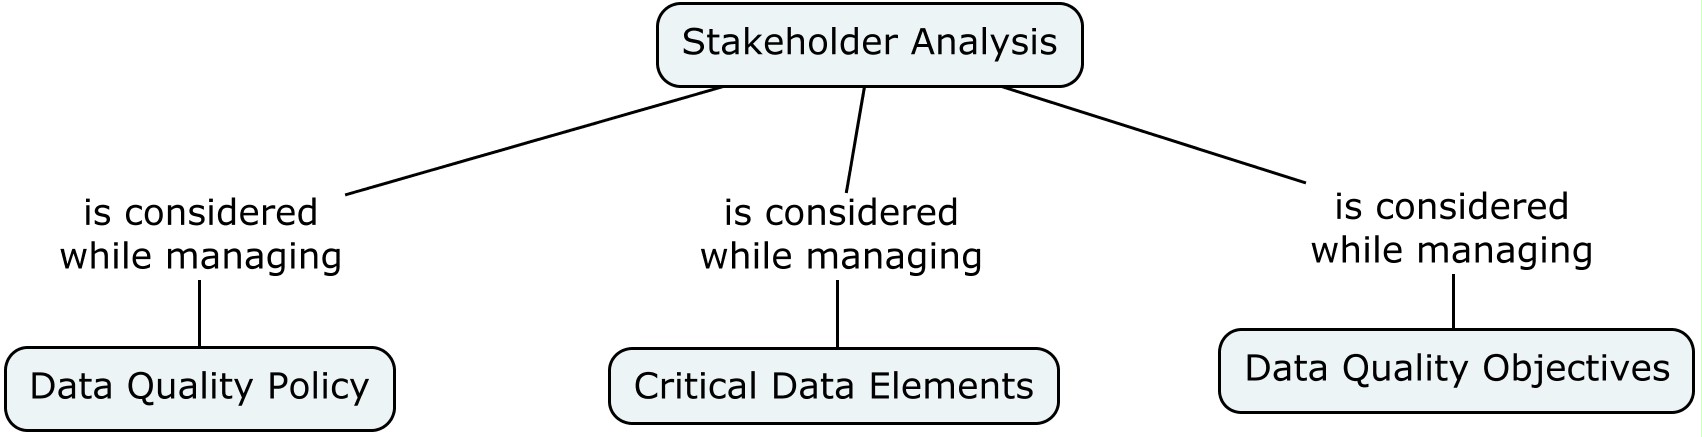 data_management:data_quality:stakeholder_analysis.jpg